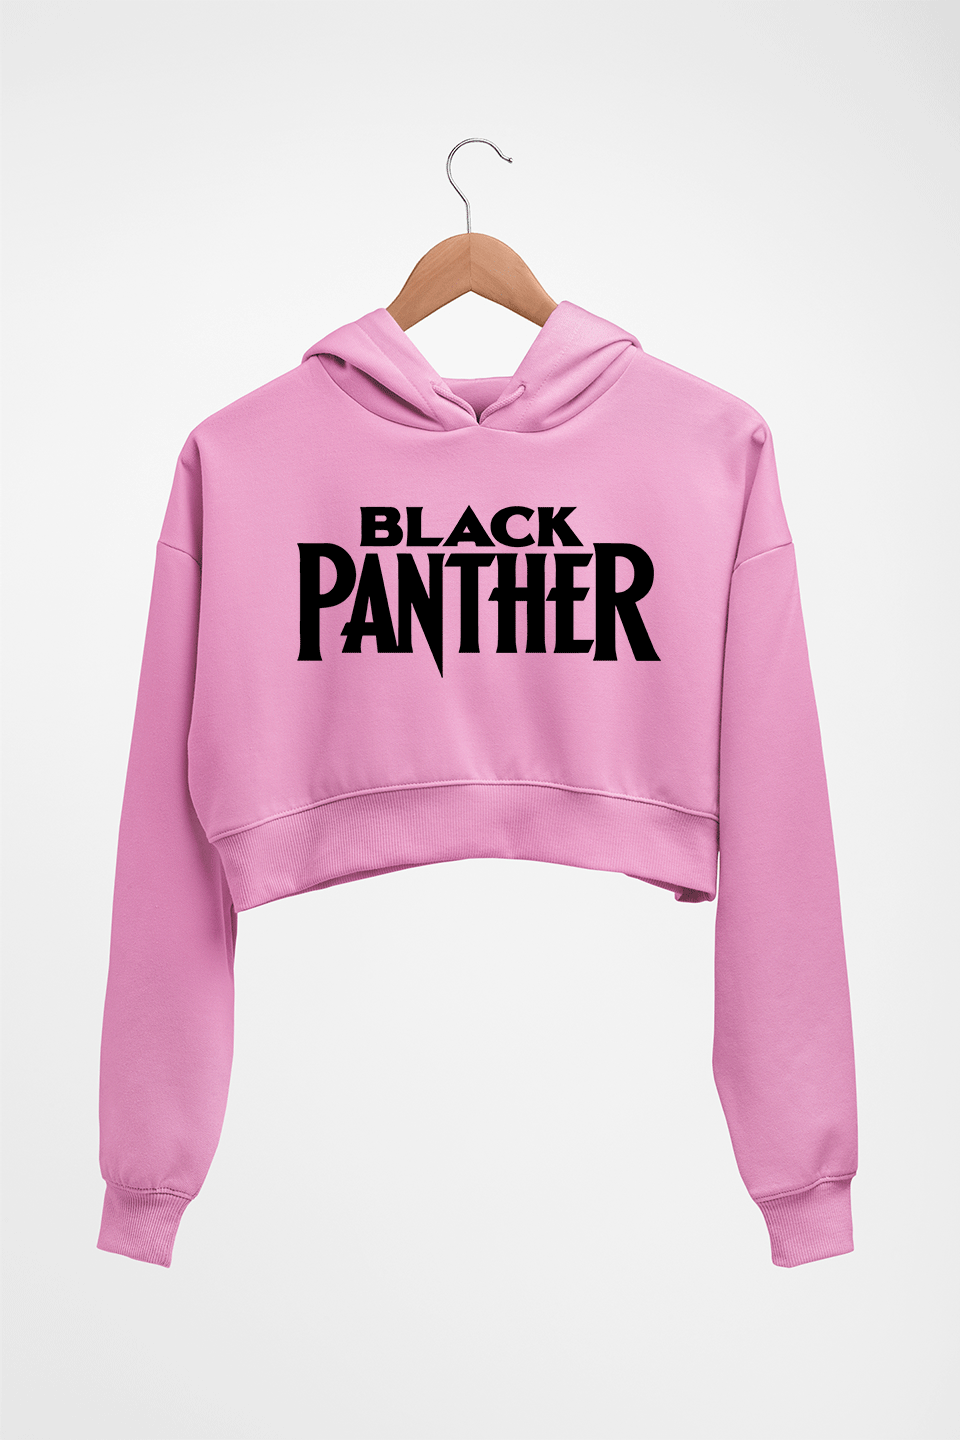 Black Panther Superhero Crop HOODIE FOR WOMEN